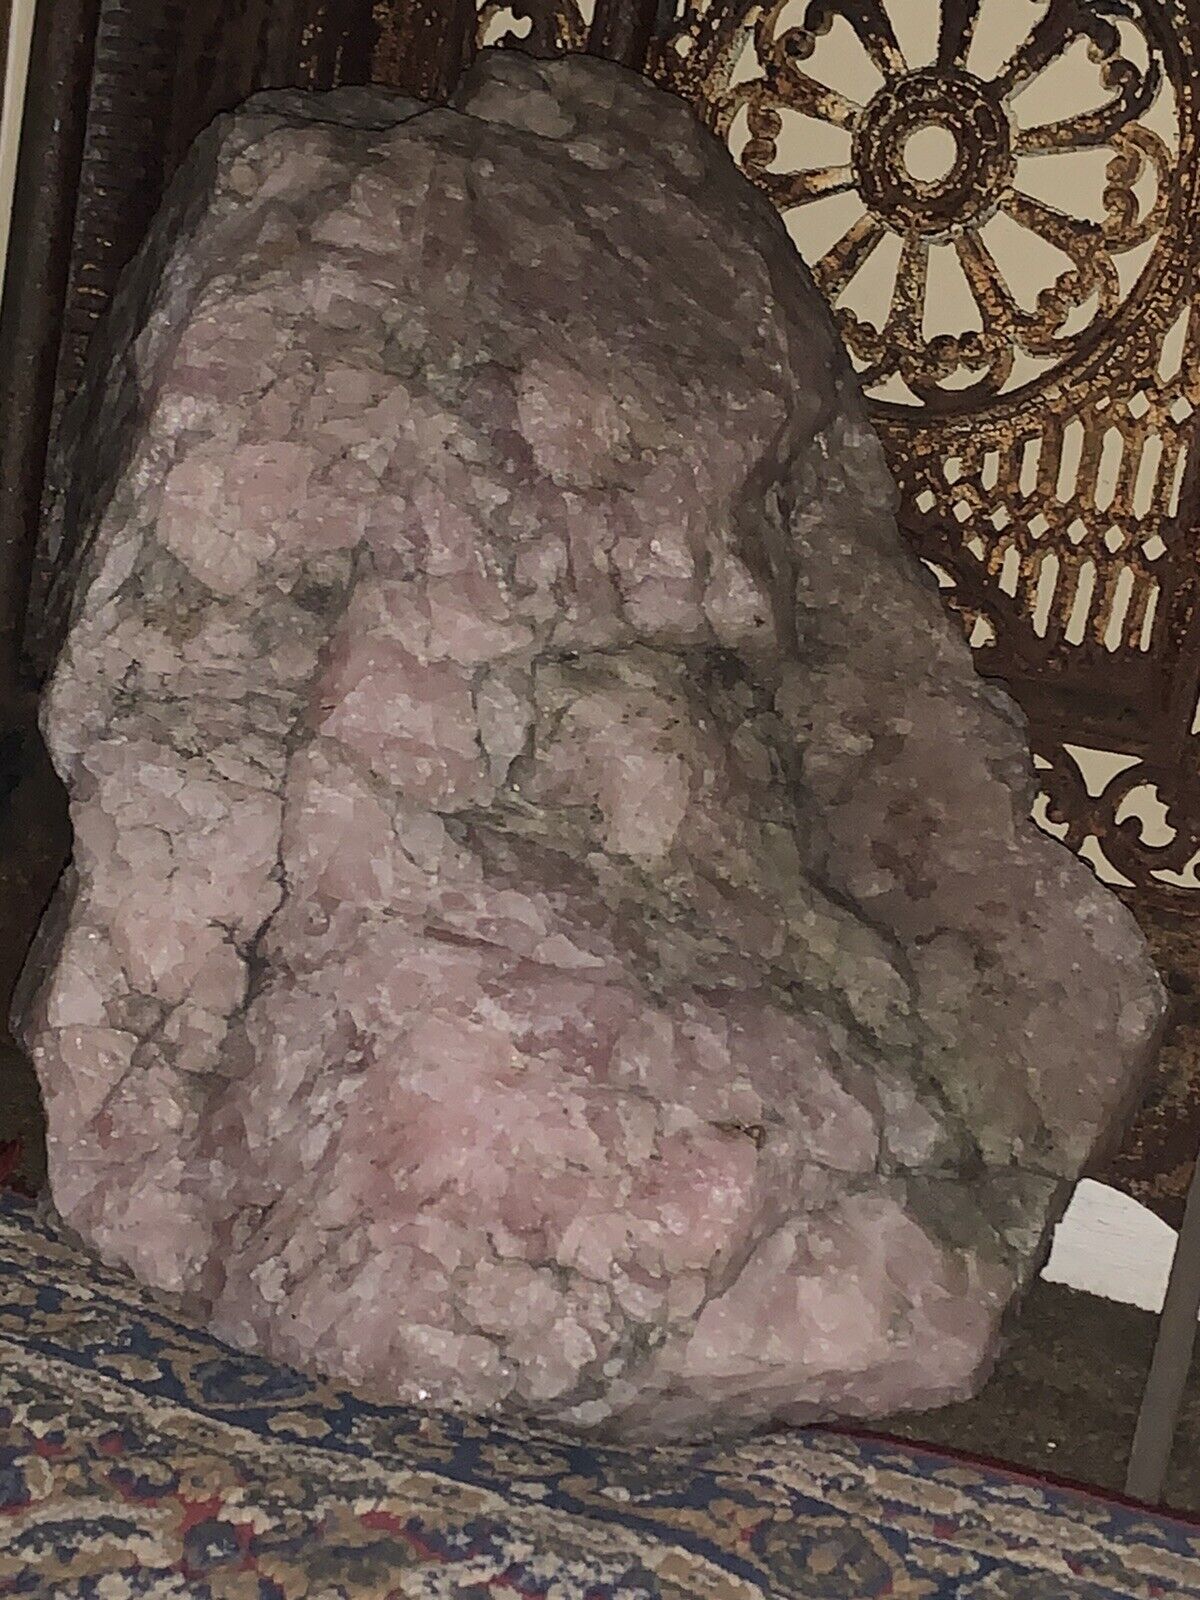 Giant 101 pound amazing rose quartz crystal rock stone Life Love Happiness Peace